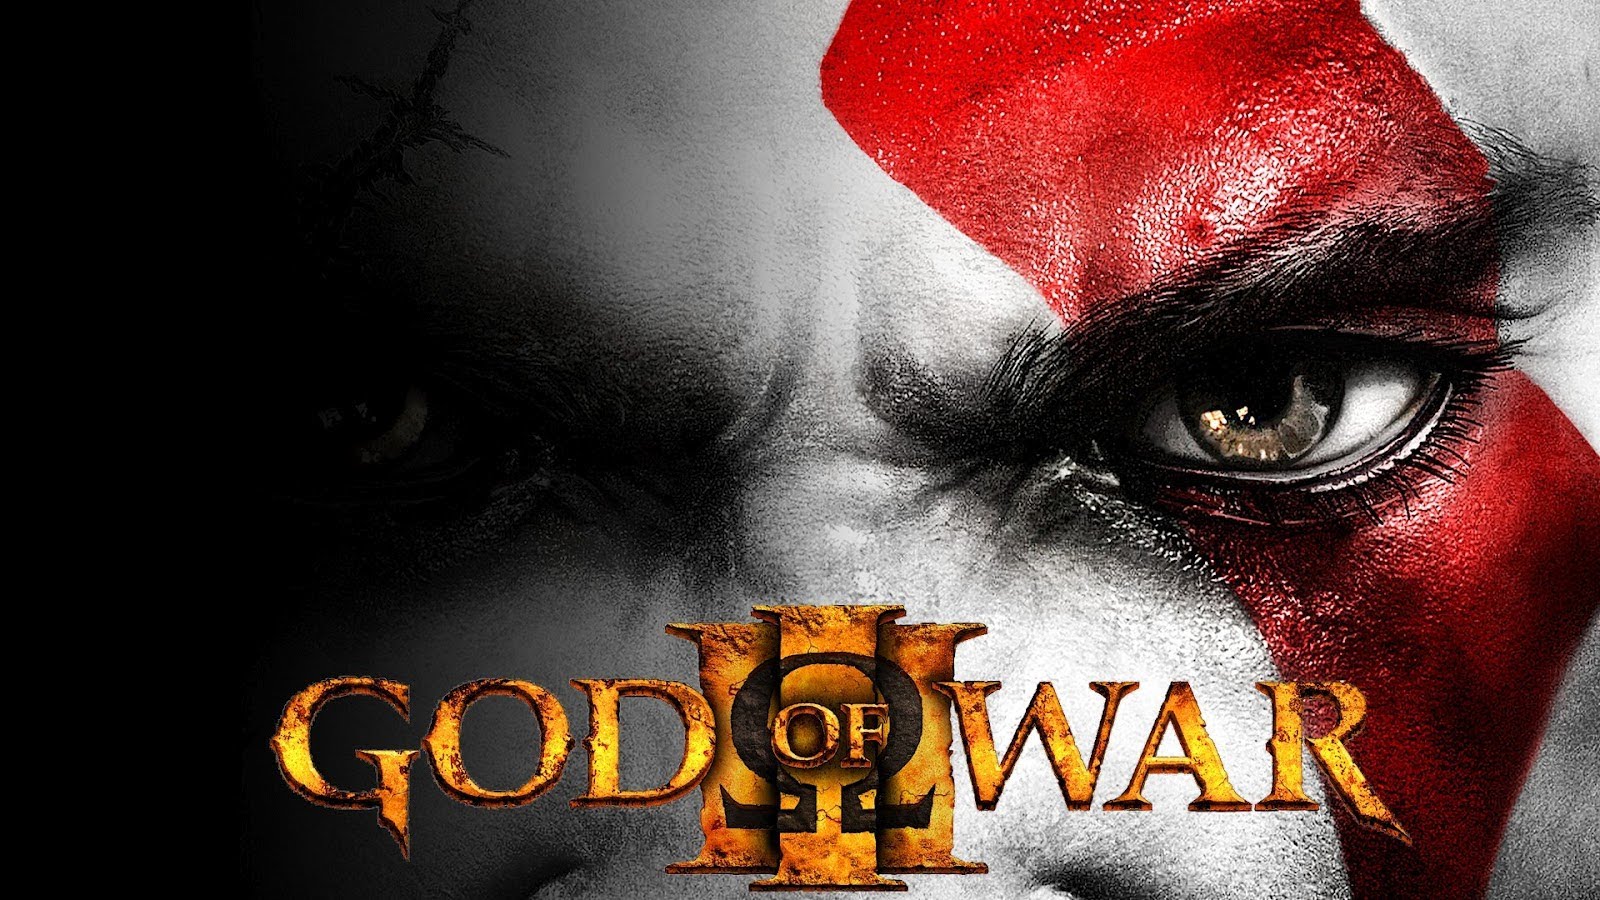 Kratos (God of War 3), Comic vs Anime vs Cartoon Wiki